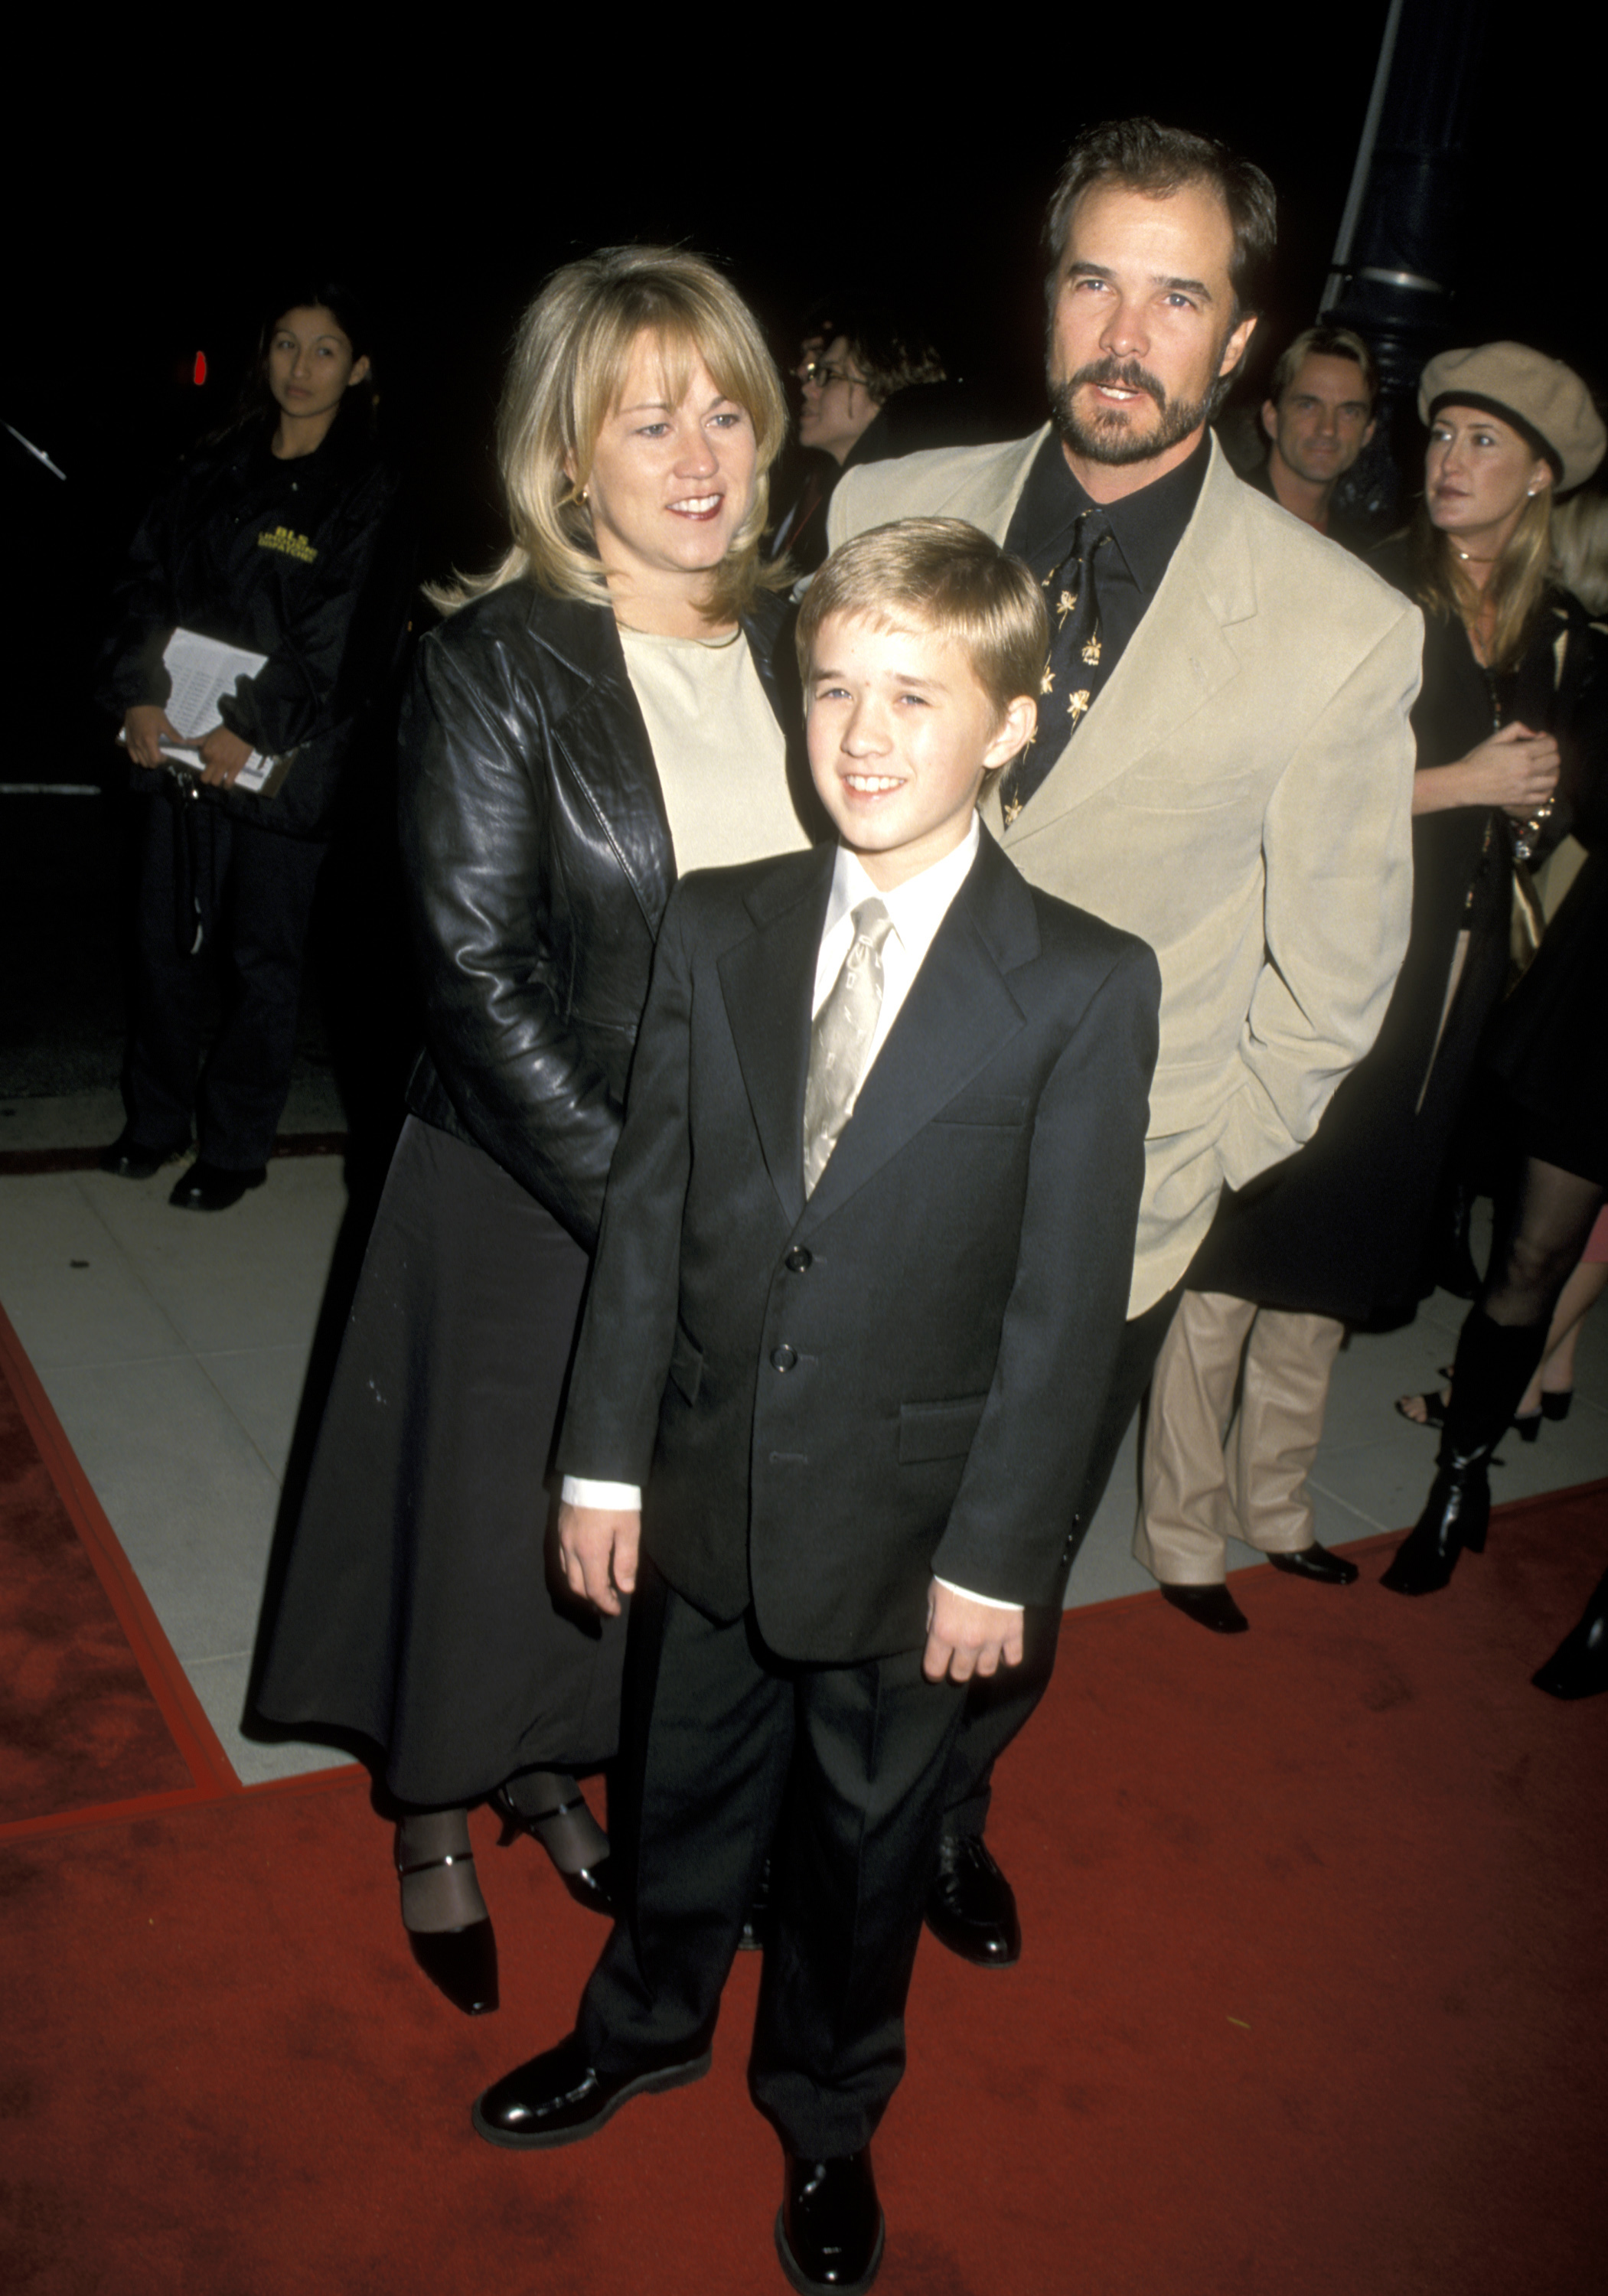 Theresa Osment, Haley Osment y Michael Osment en el estreno de "Pay It Forward" en Los Ángeles, 2000 | Fuente: Getty Images